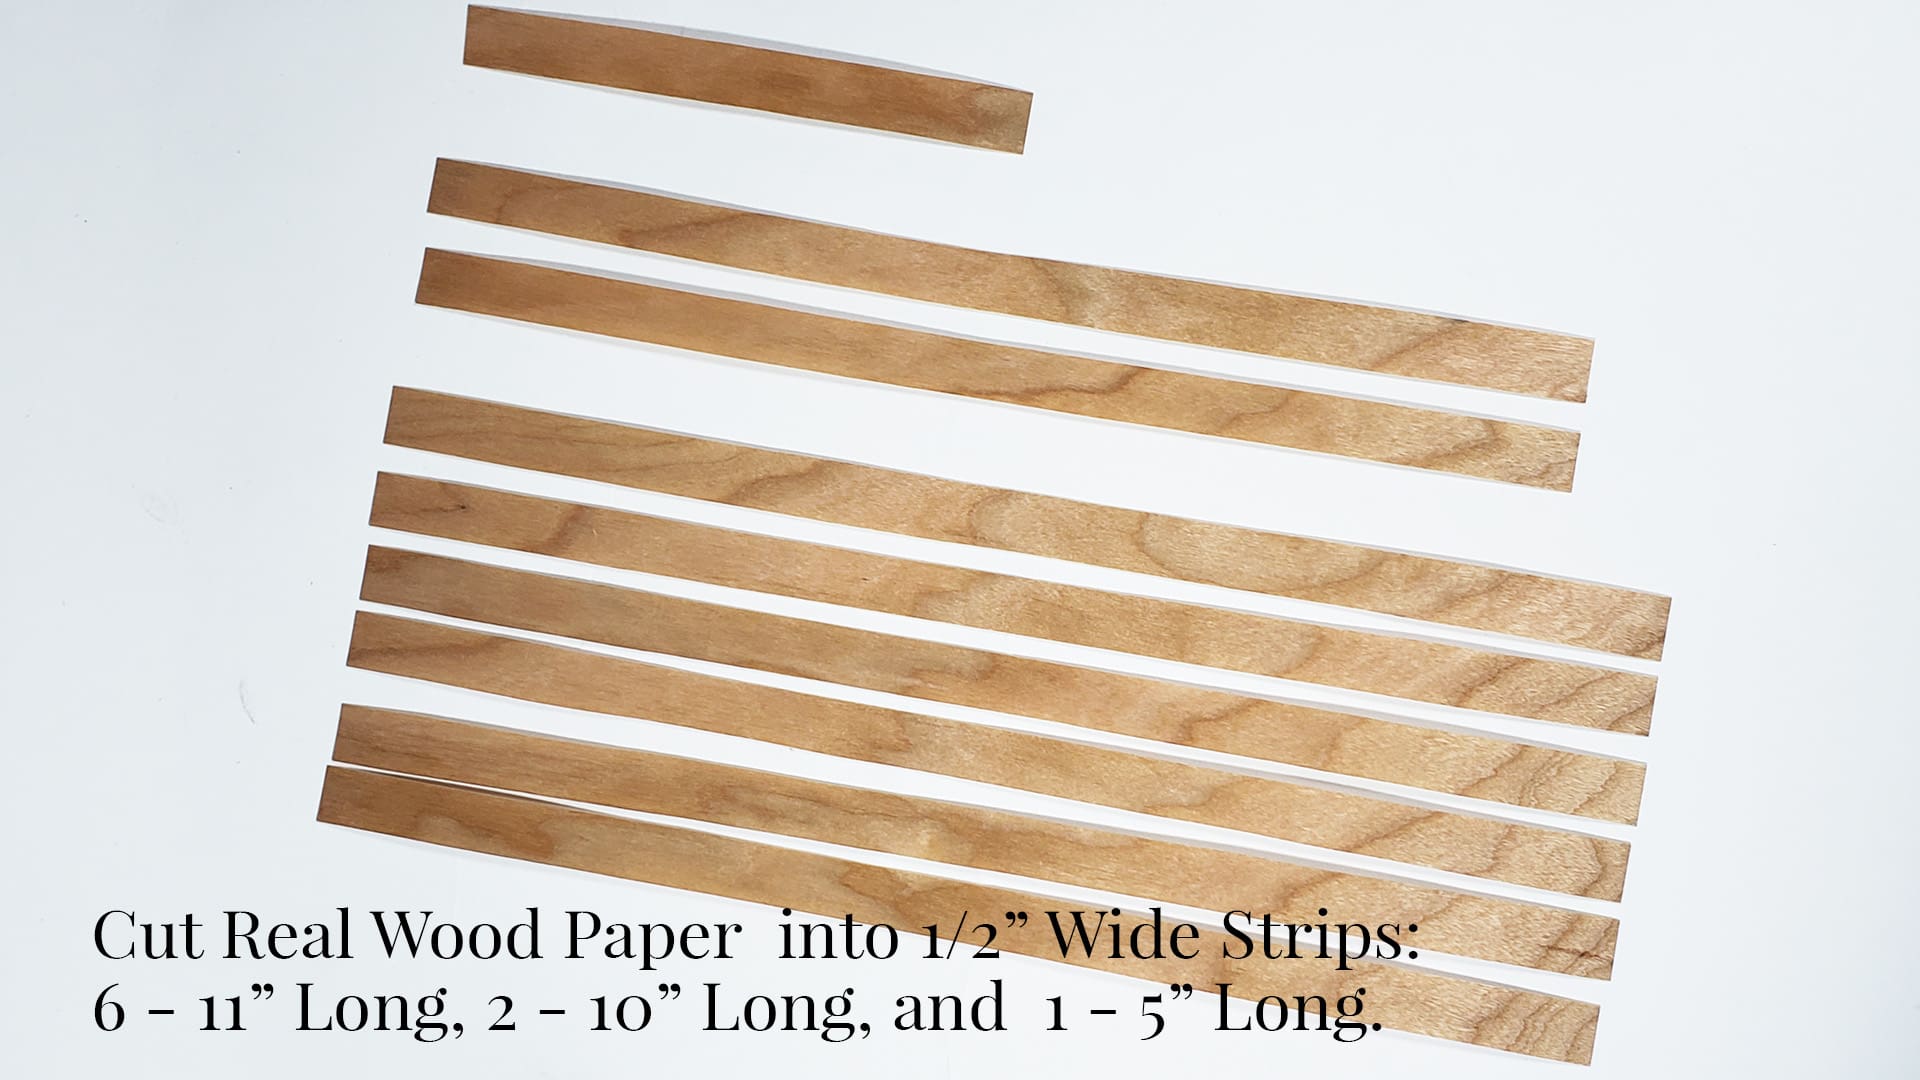 Cut wood into 1/2" wide strips